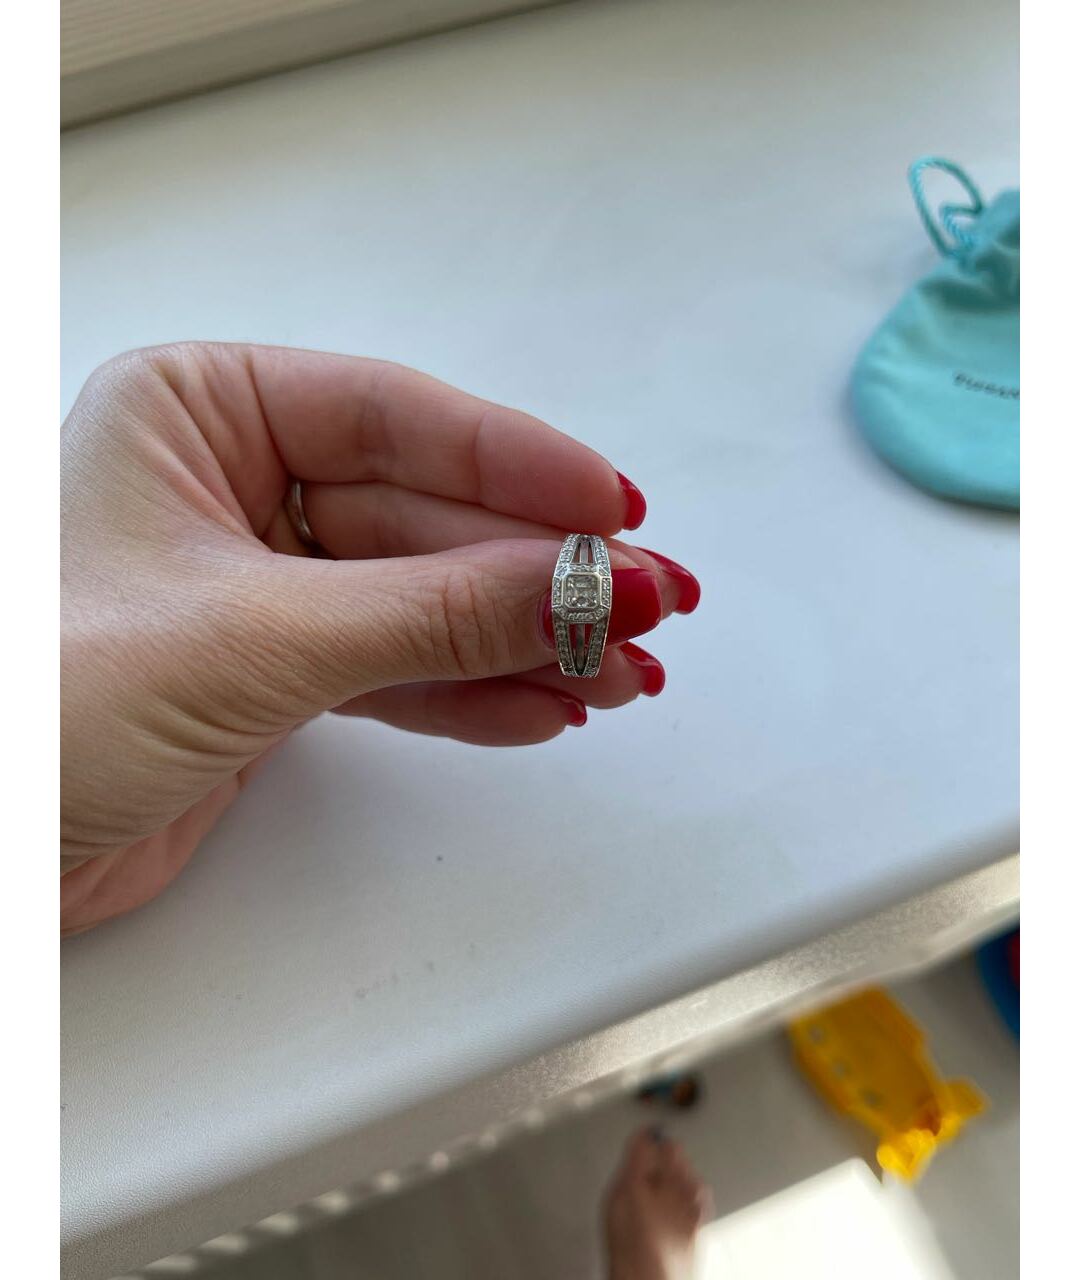 TIFFANY&CO Белое кольцо из белого золота, фото 2